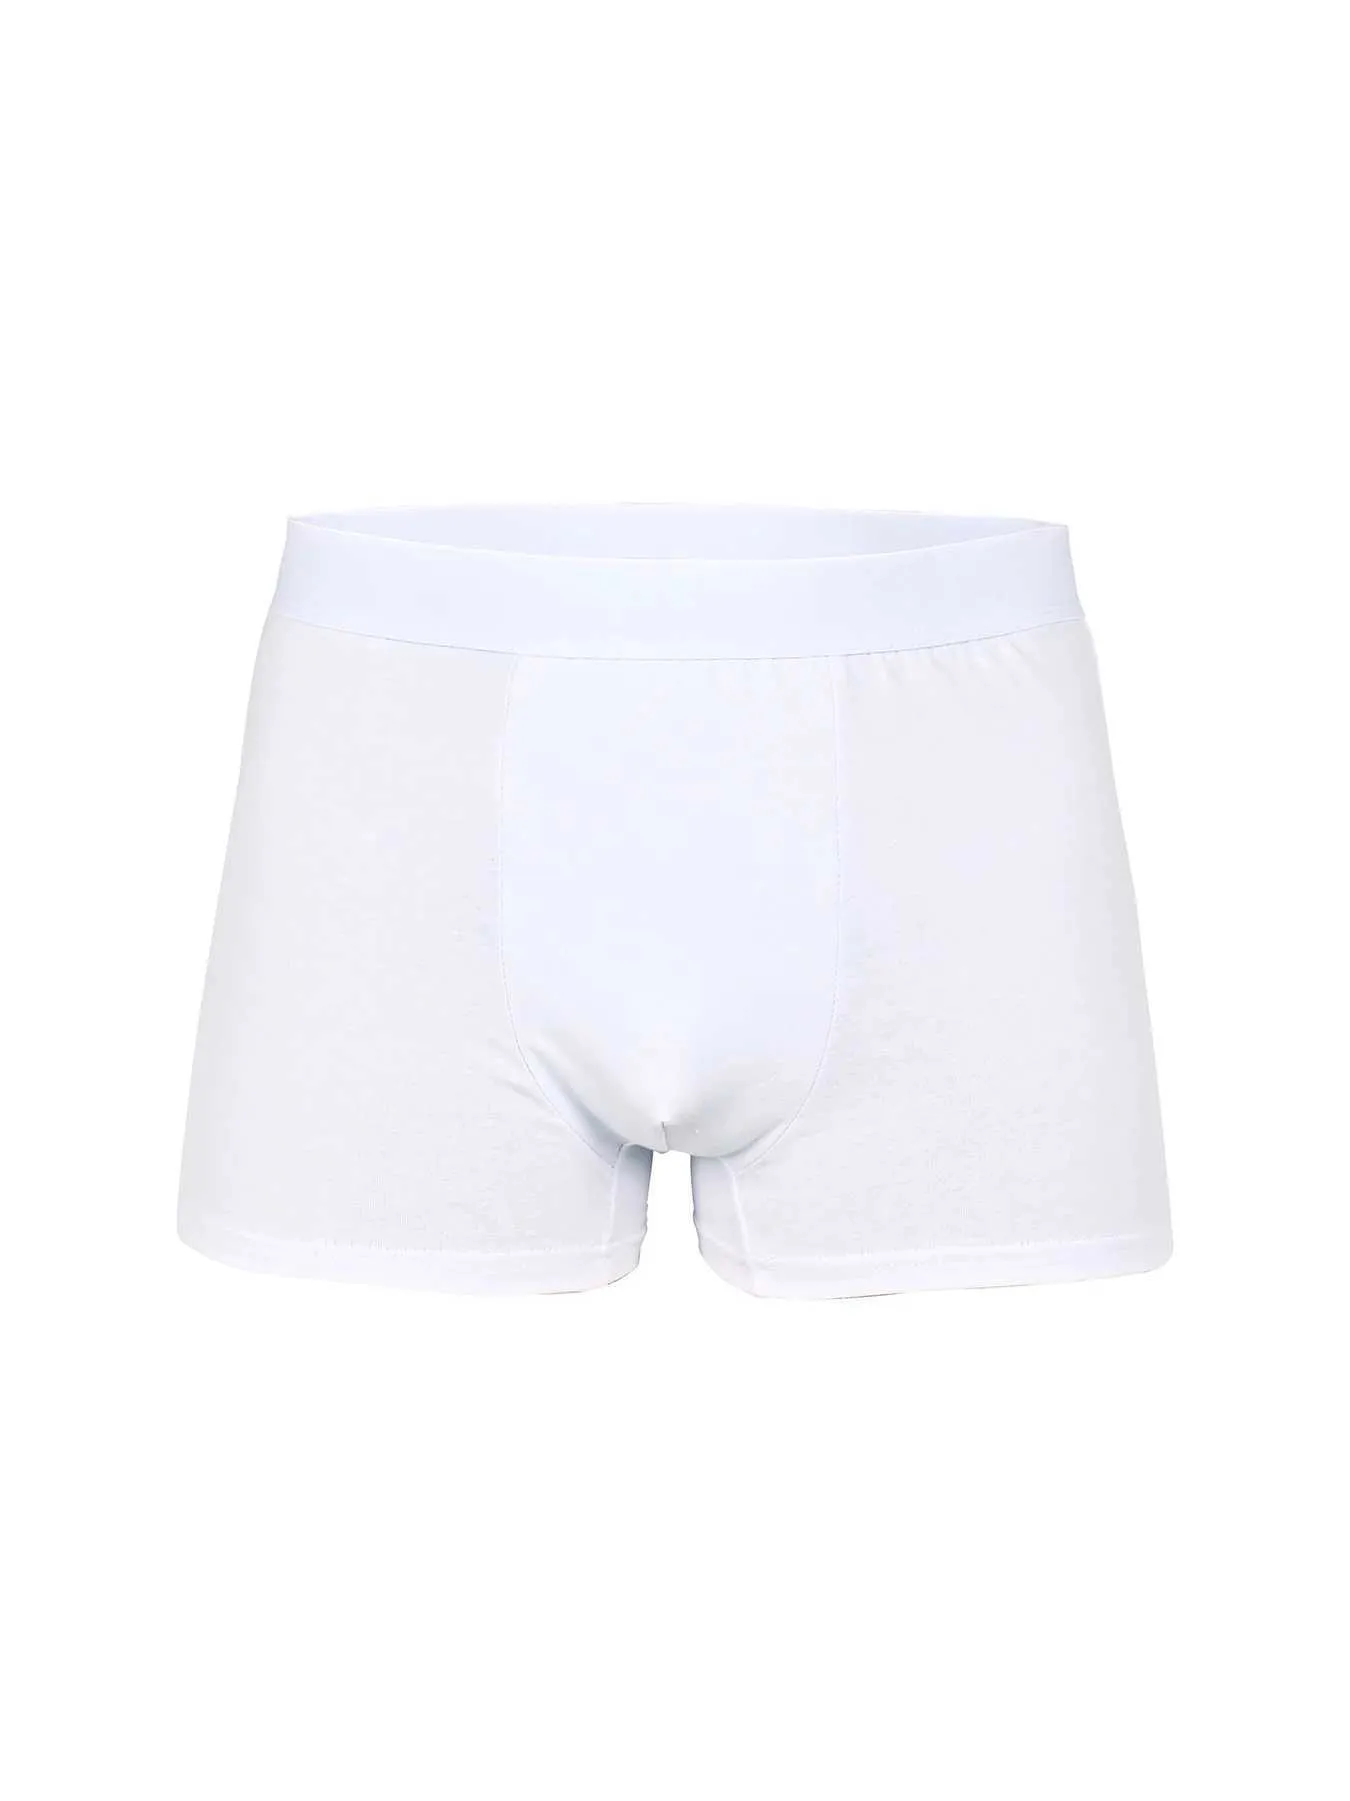 Calzoncillos de PACK WHITE 2024 Men bragas de poliéster Underwear Boxer de marca masculina y calzoncillos para Homme Luxury Set Shorts Box Slip Kit Y240507